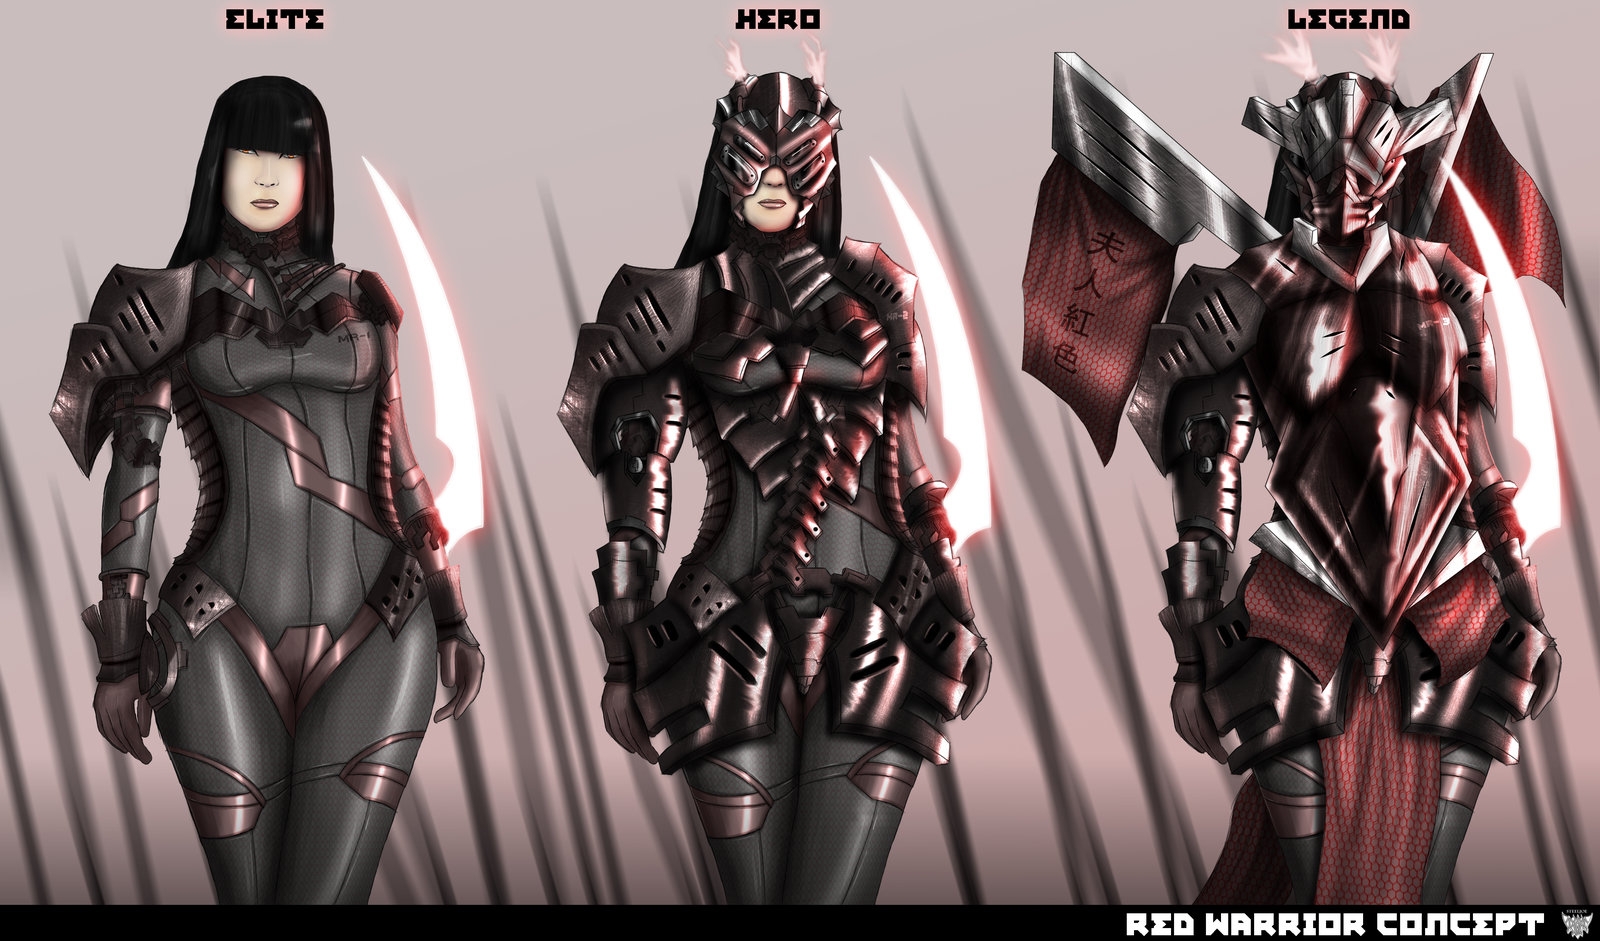 Red Warrior Concept Art by SteelJoe